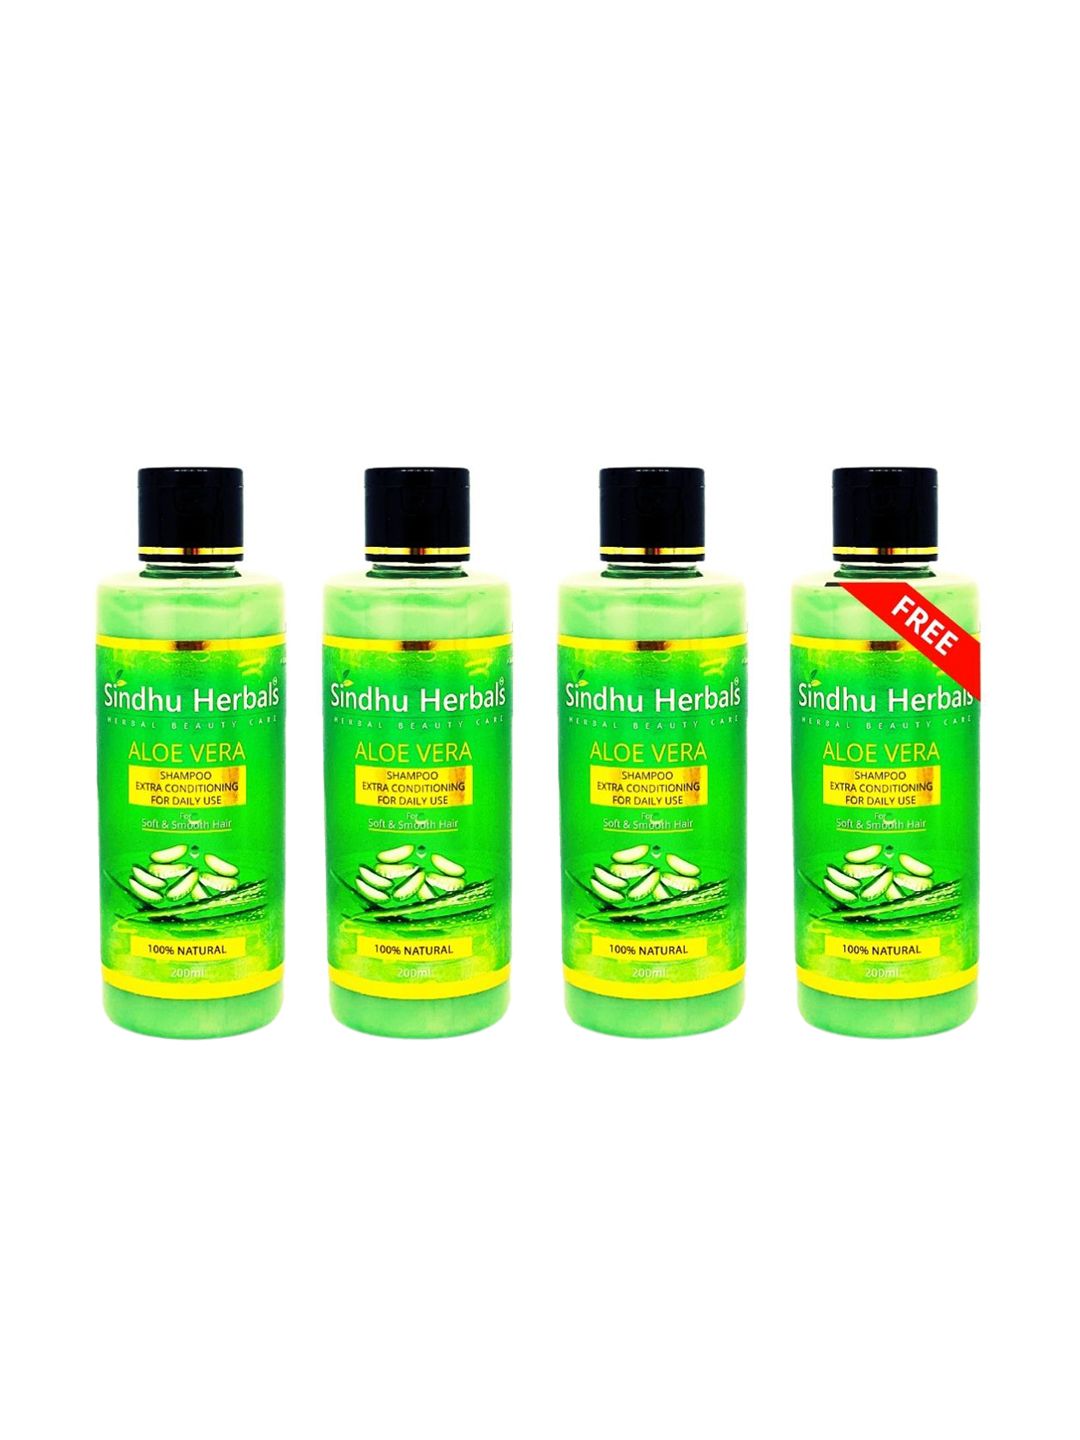 Sindhu Herbals Set Of 4 Aloe Vera Shampoos - 200 ml Each Price in India